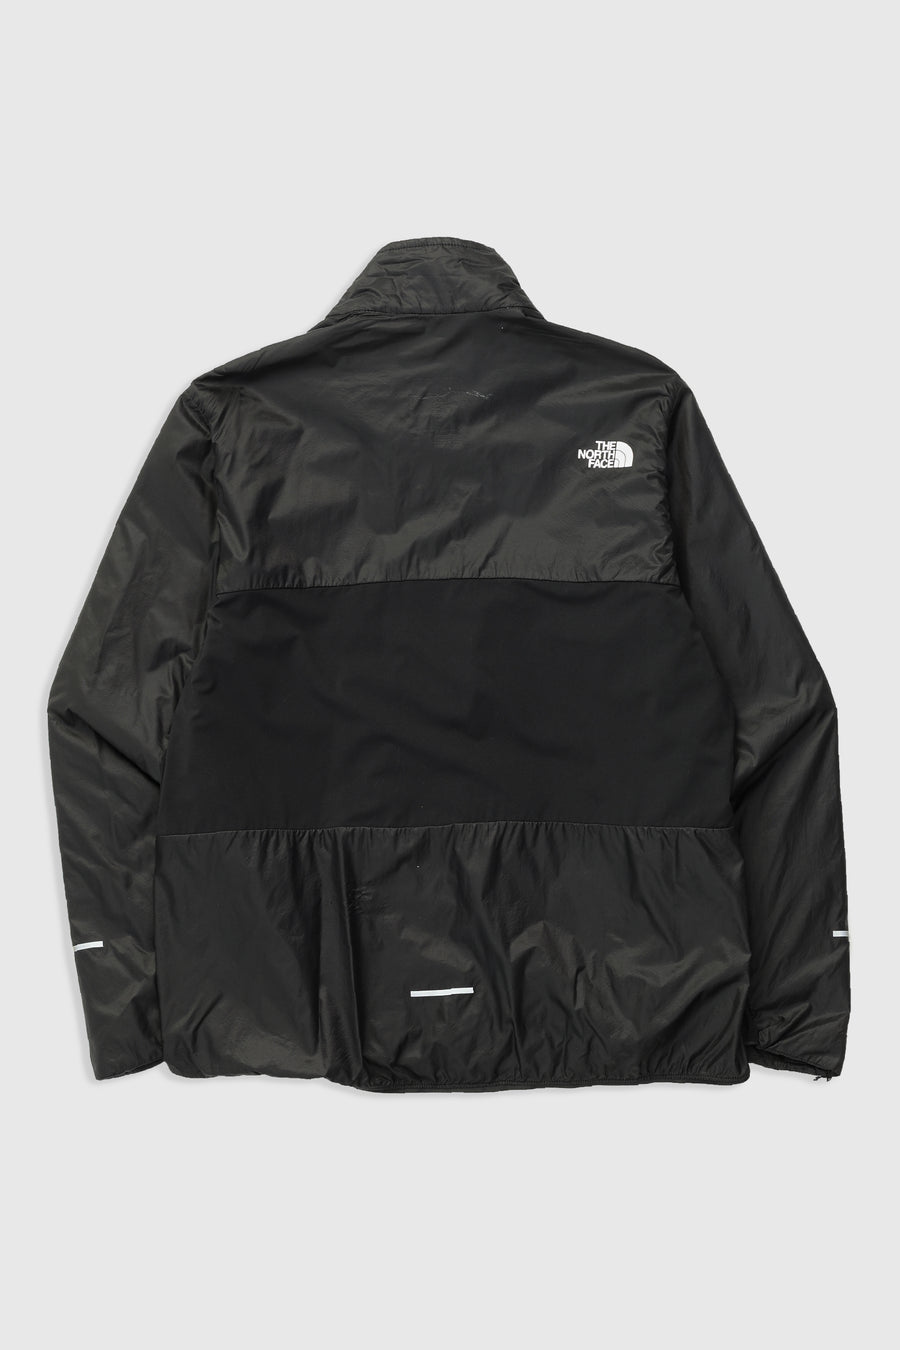 Vintage North Face Rain Jacket - Men's XL